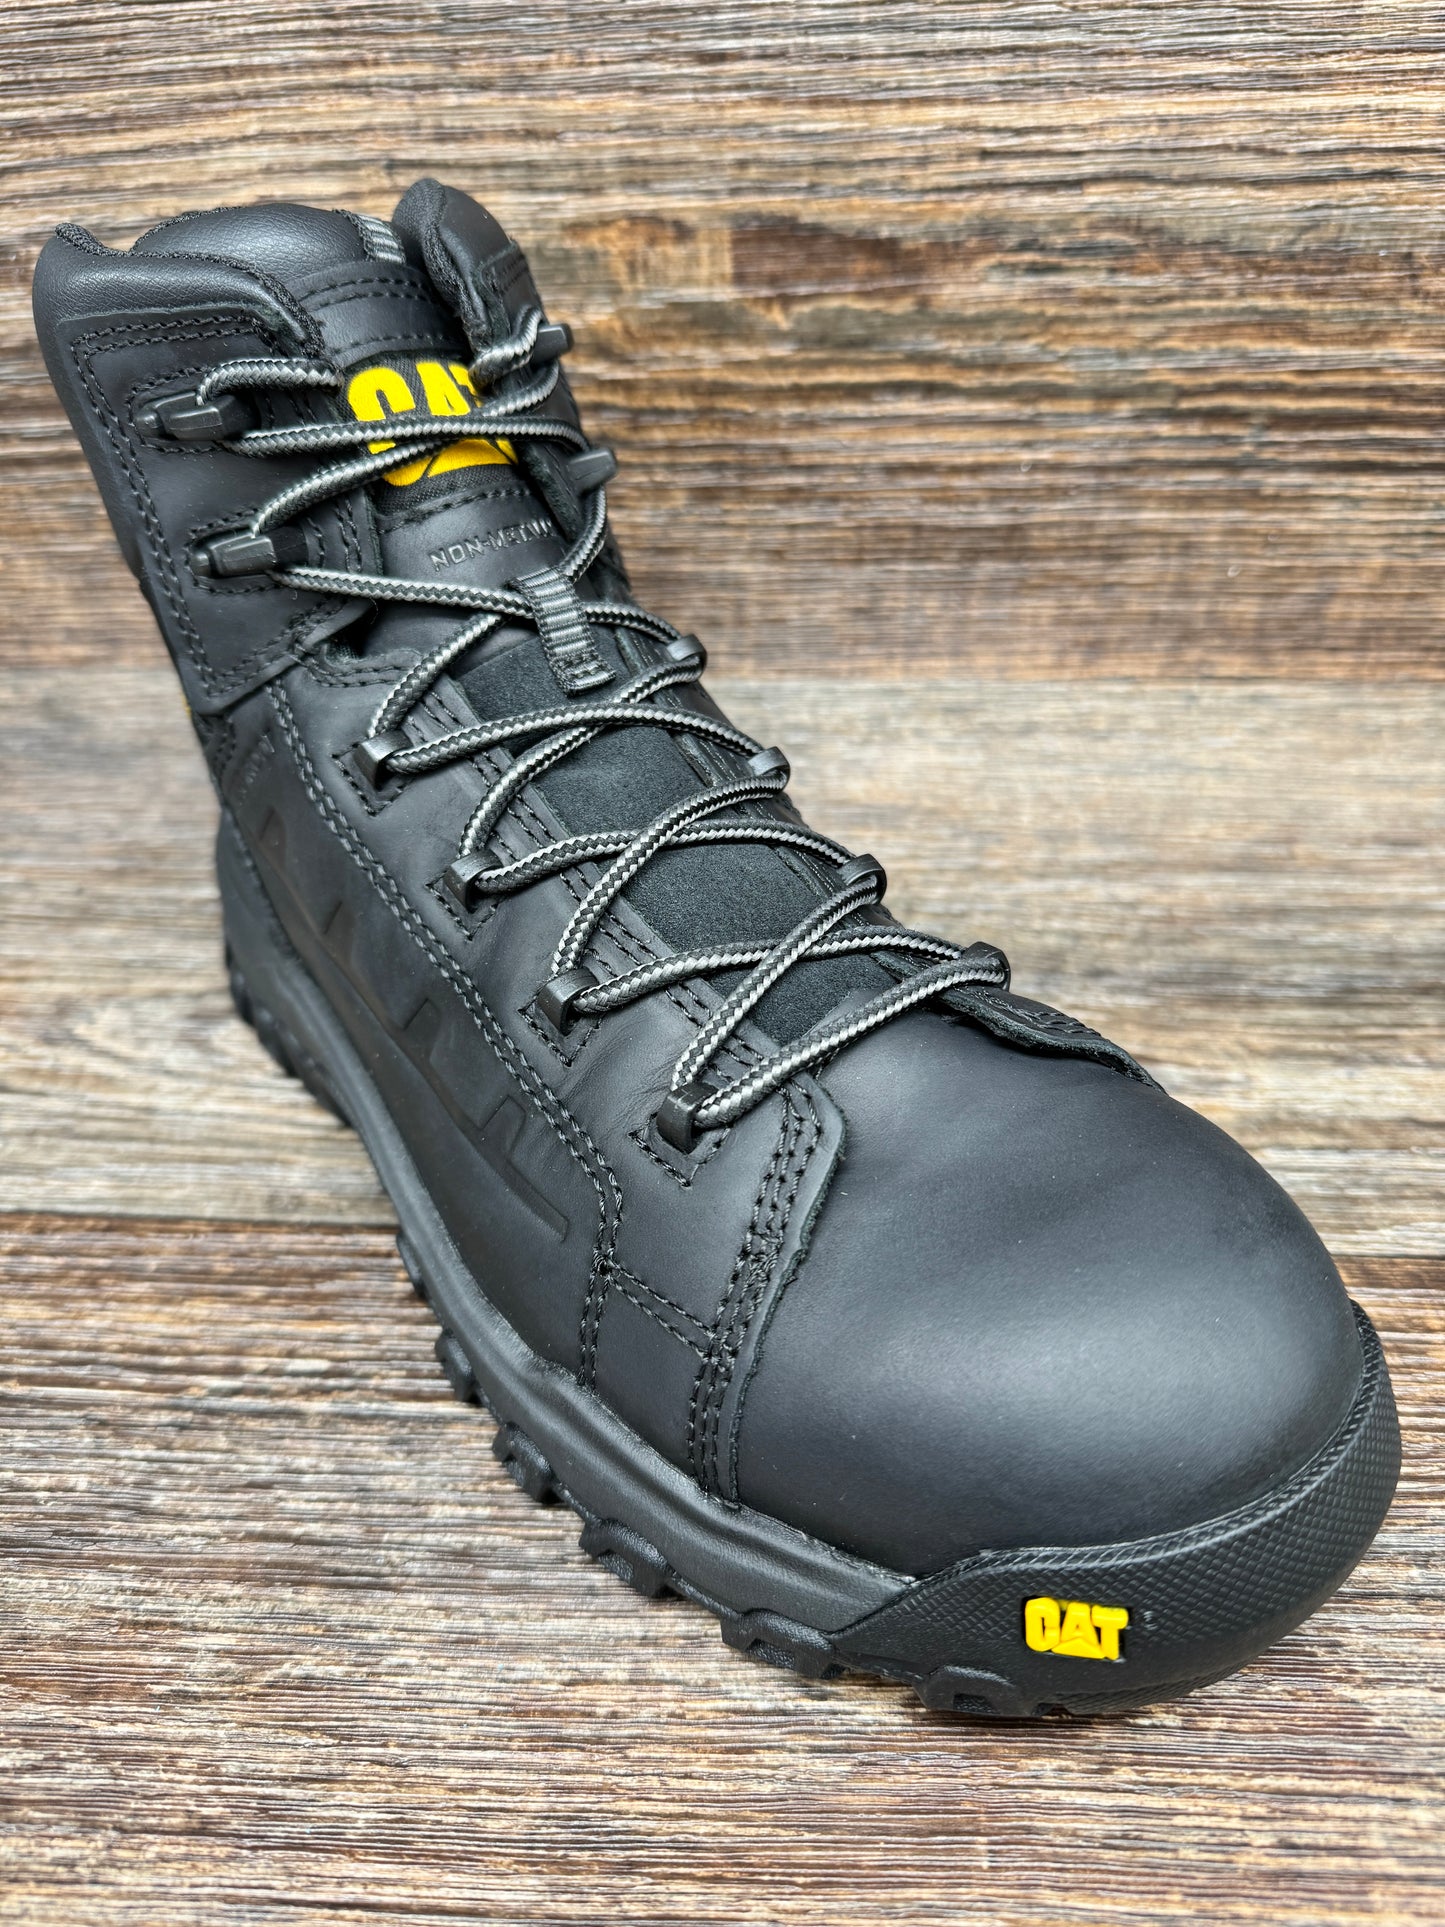 P91696 Men's Threshold Rebound Waterproof Composite Toe Work Boot by Caterpillar